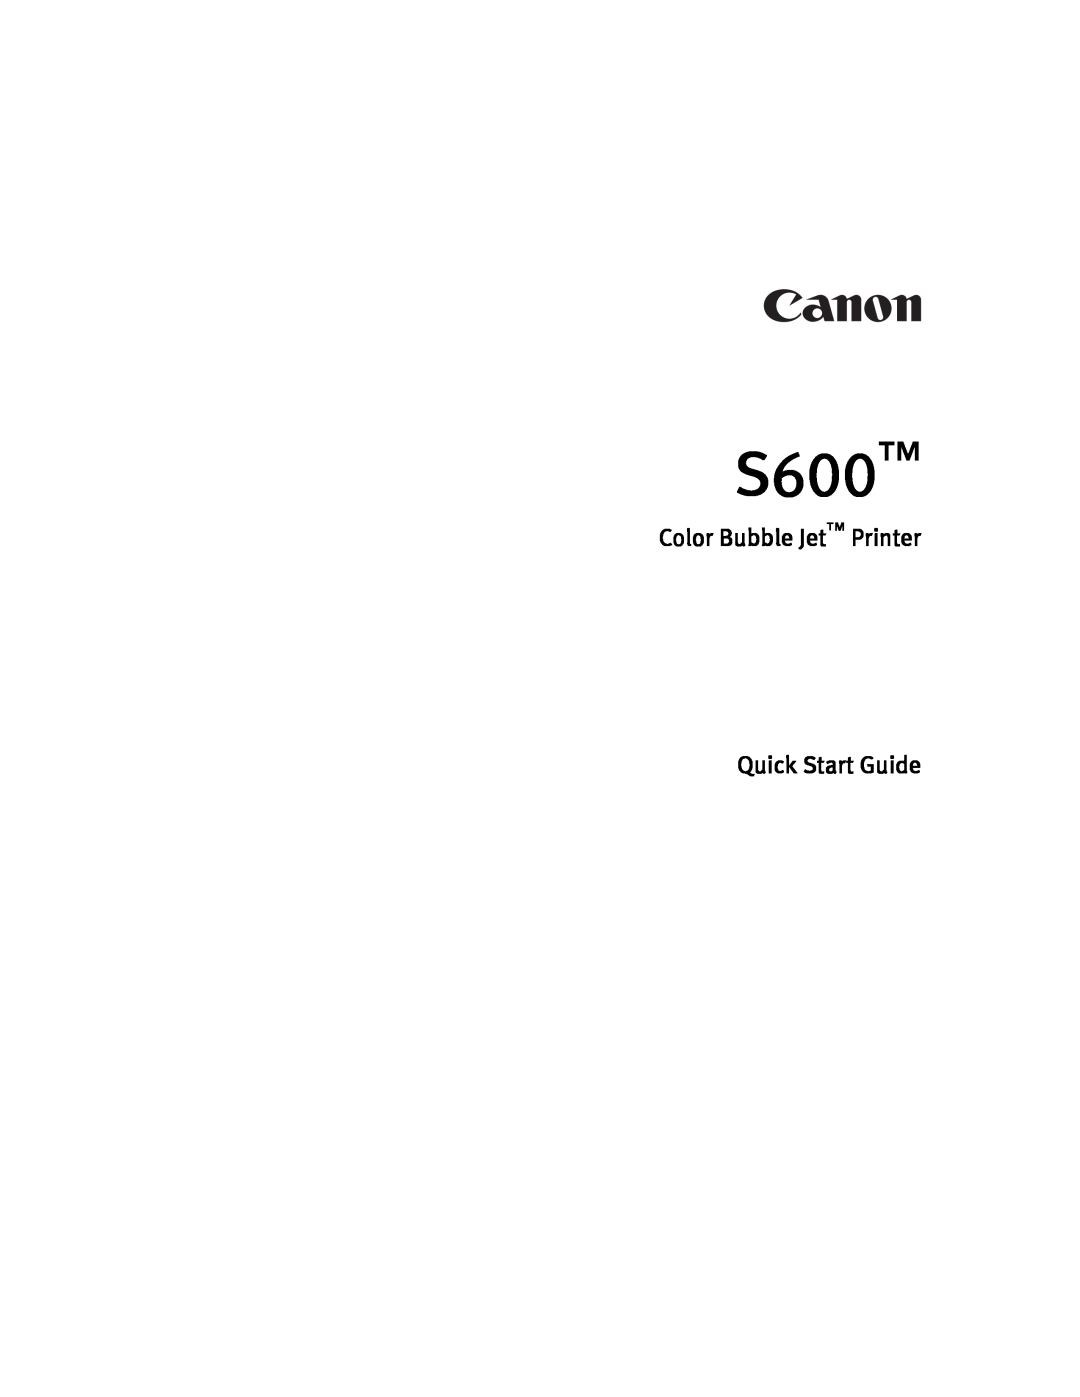 Canon S600 quick start Color Bubble Jet Printer Quick Start Guide 